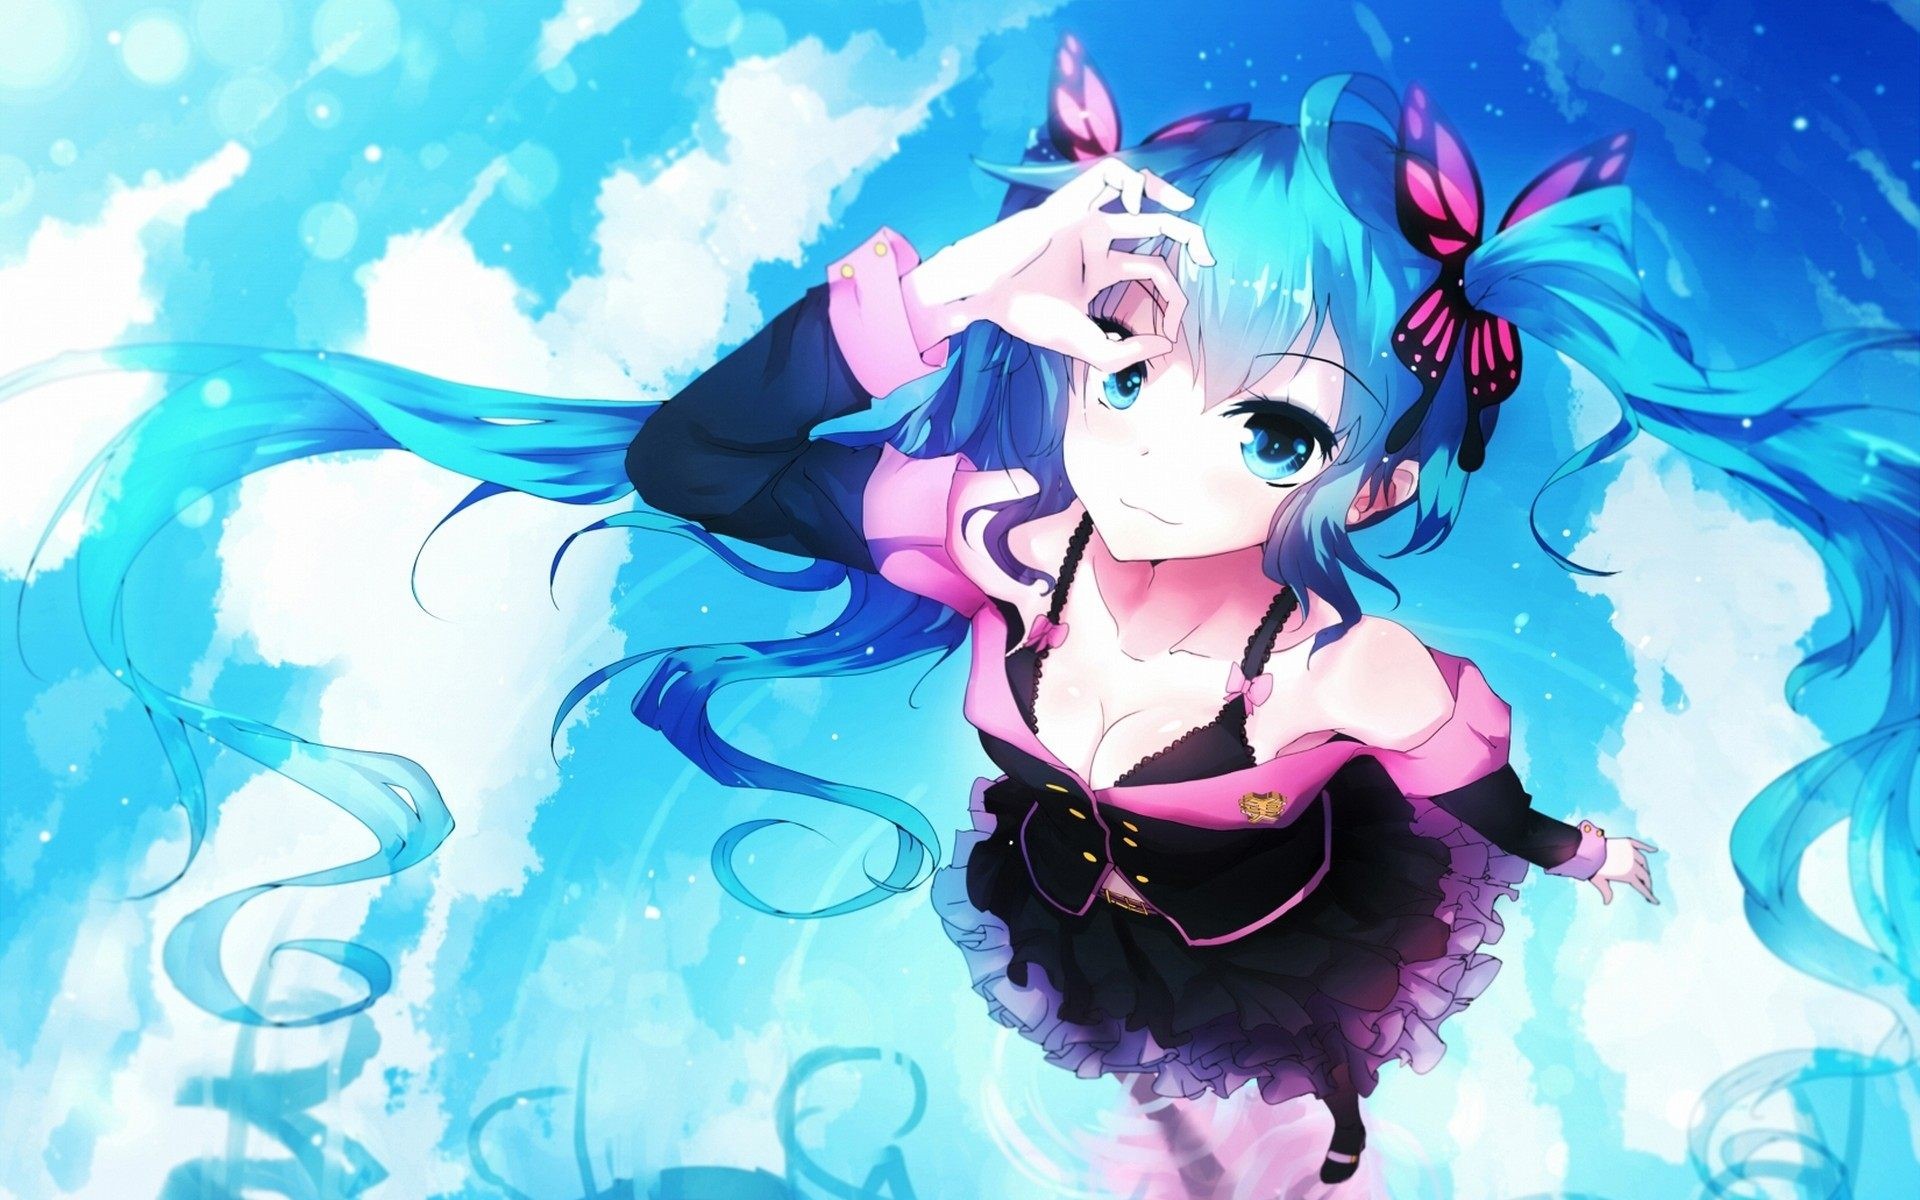 Anime Girl wallpaper HD ·① Download free cool full HD ...